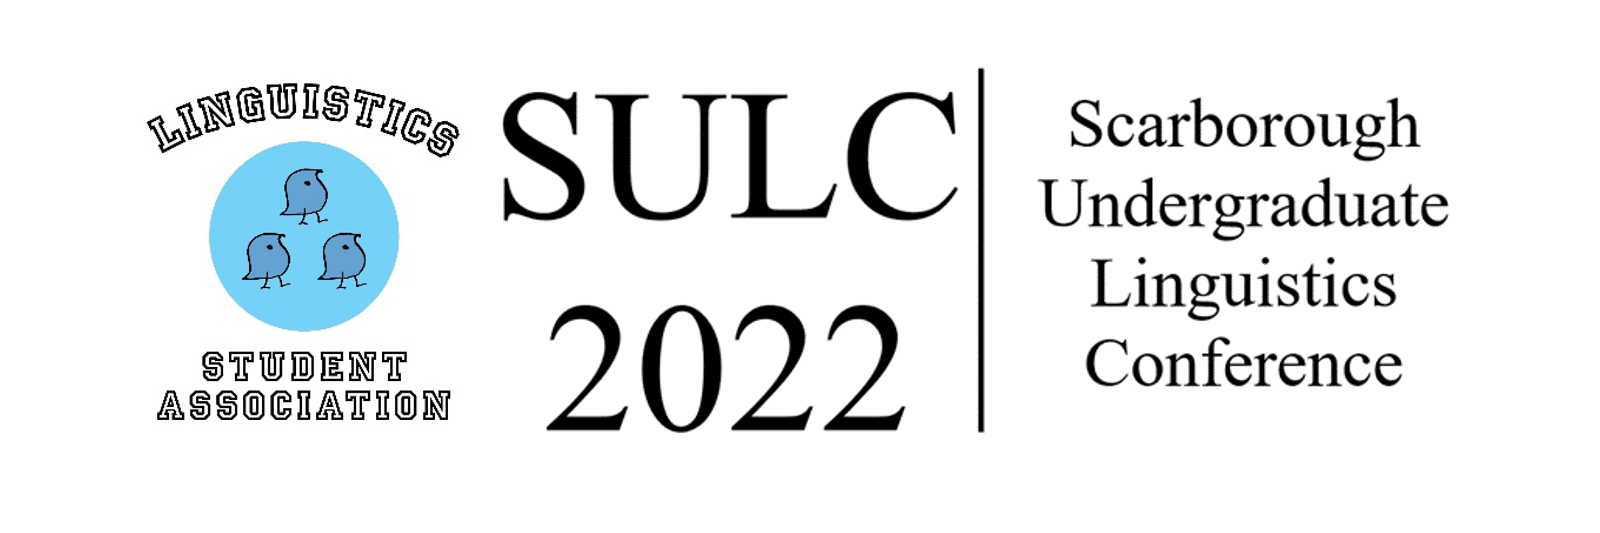 SULC 2022 banner